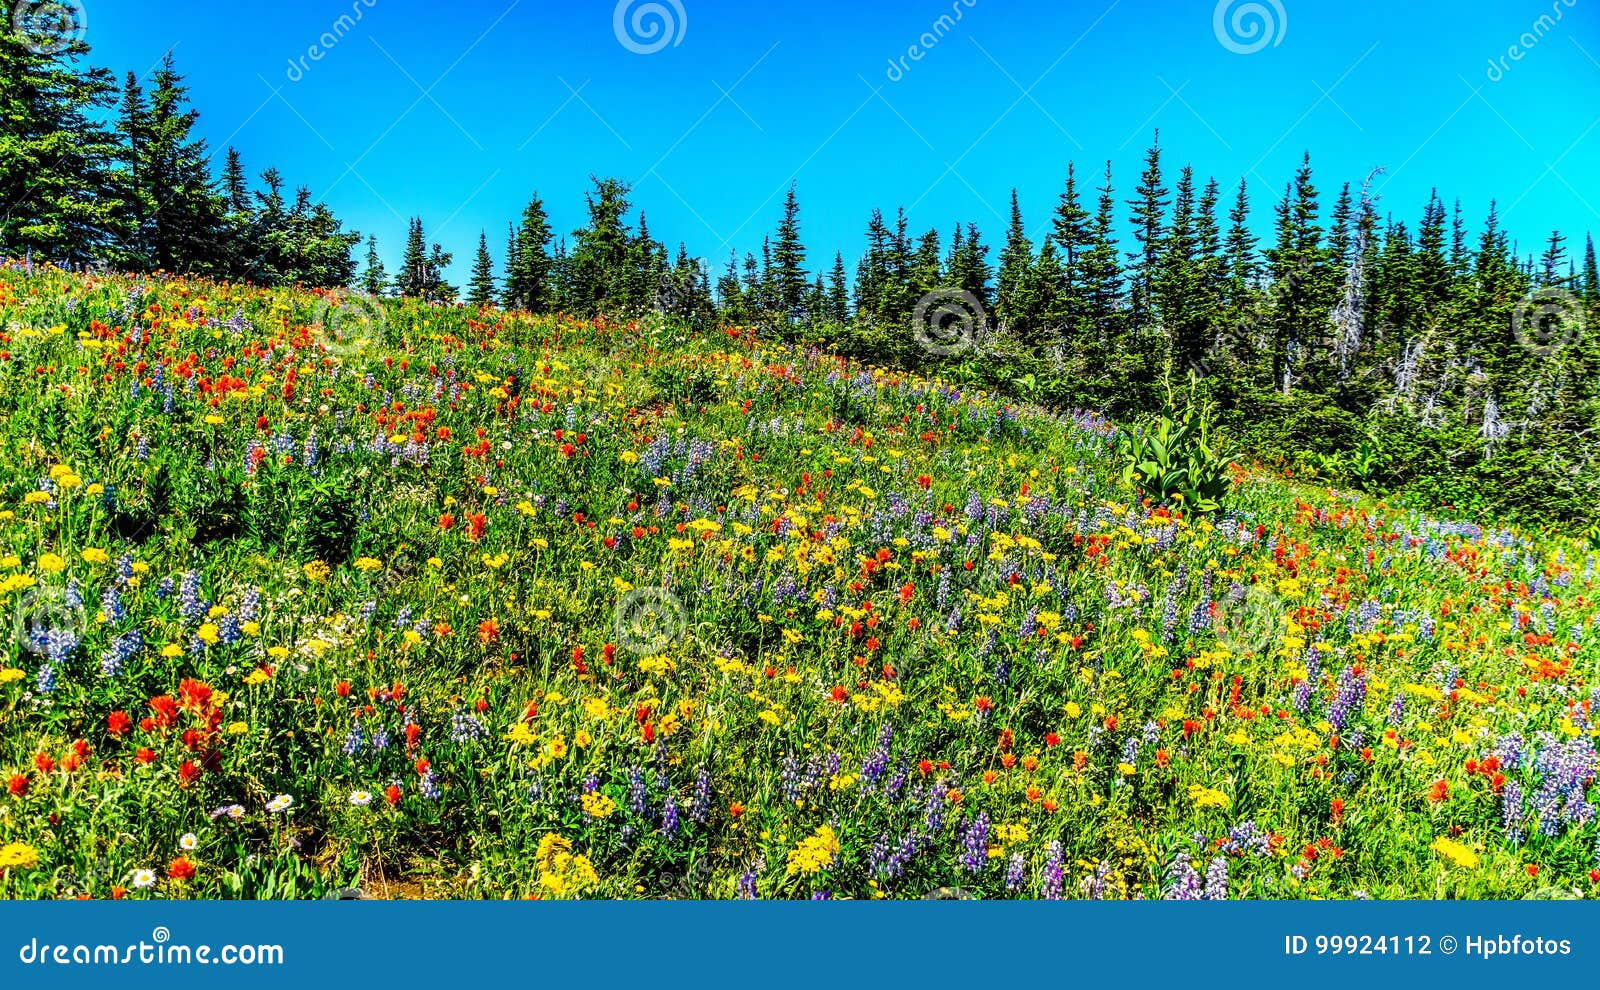 an abundance of wildflowers on juniper ridge in the high alpine